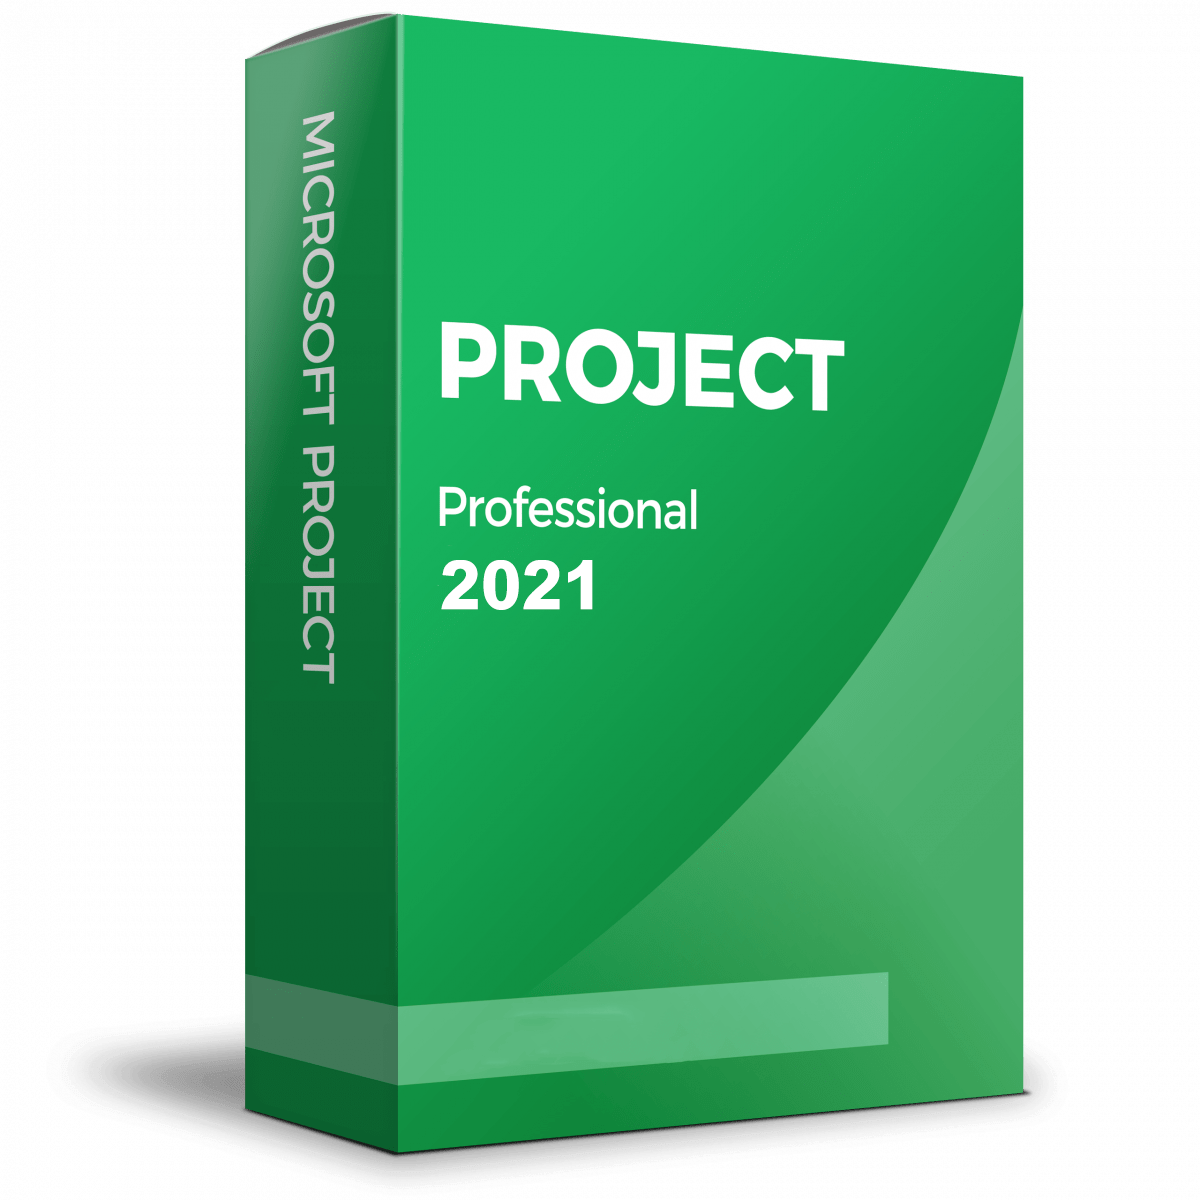 Microsoft Project 2021 Professional (PC) 32/64 Bits (Retail)